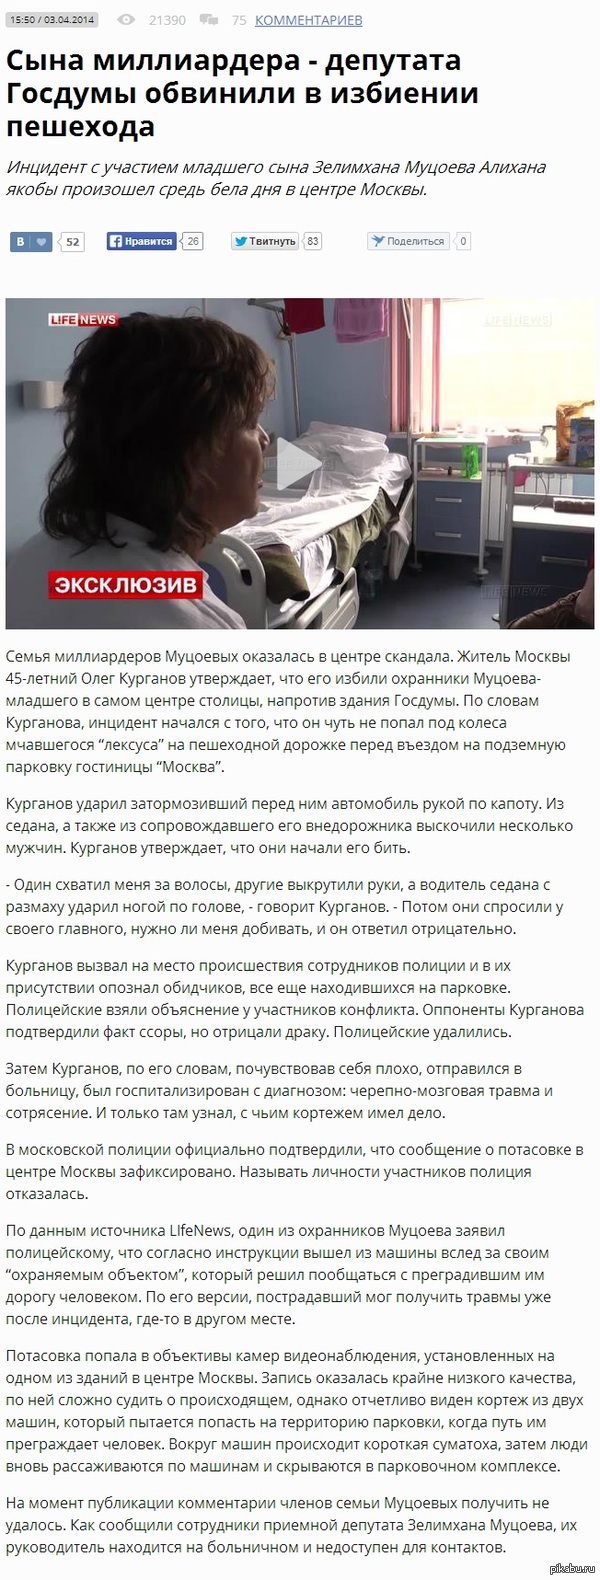   -       http://lifenews.ru/news/130519